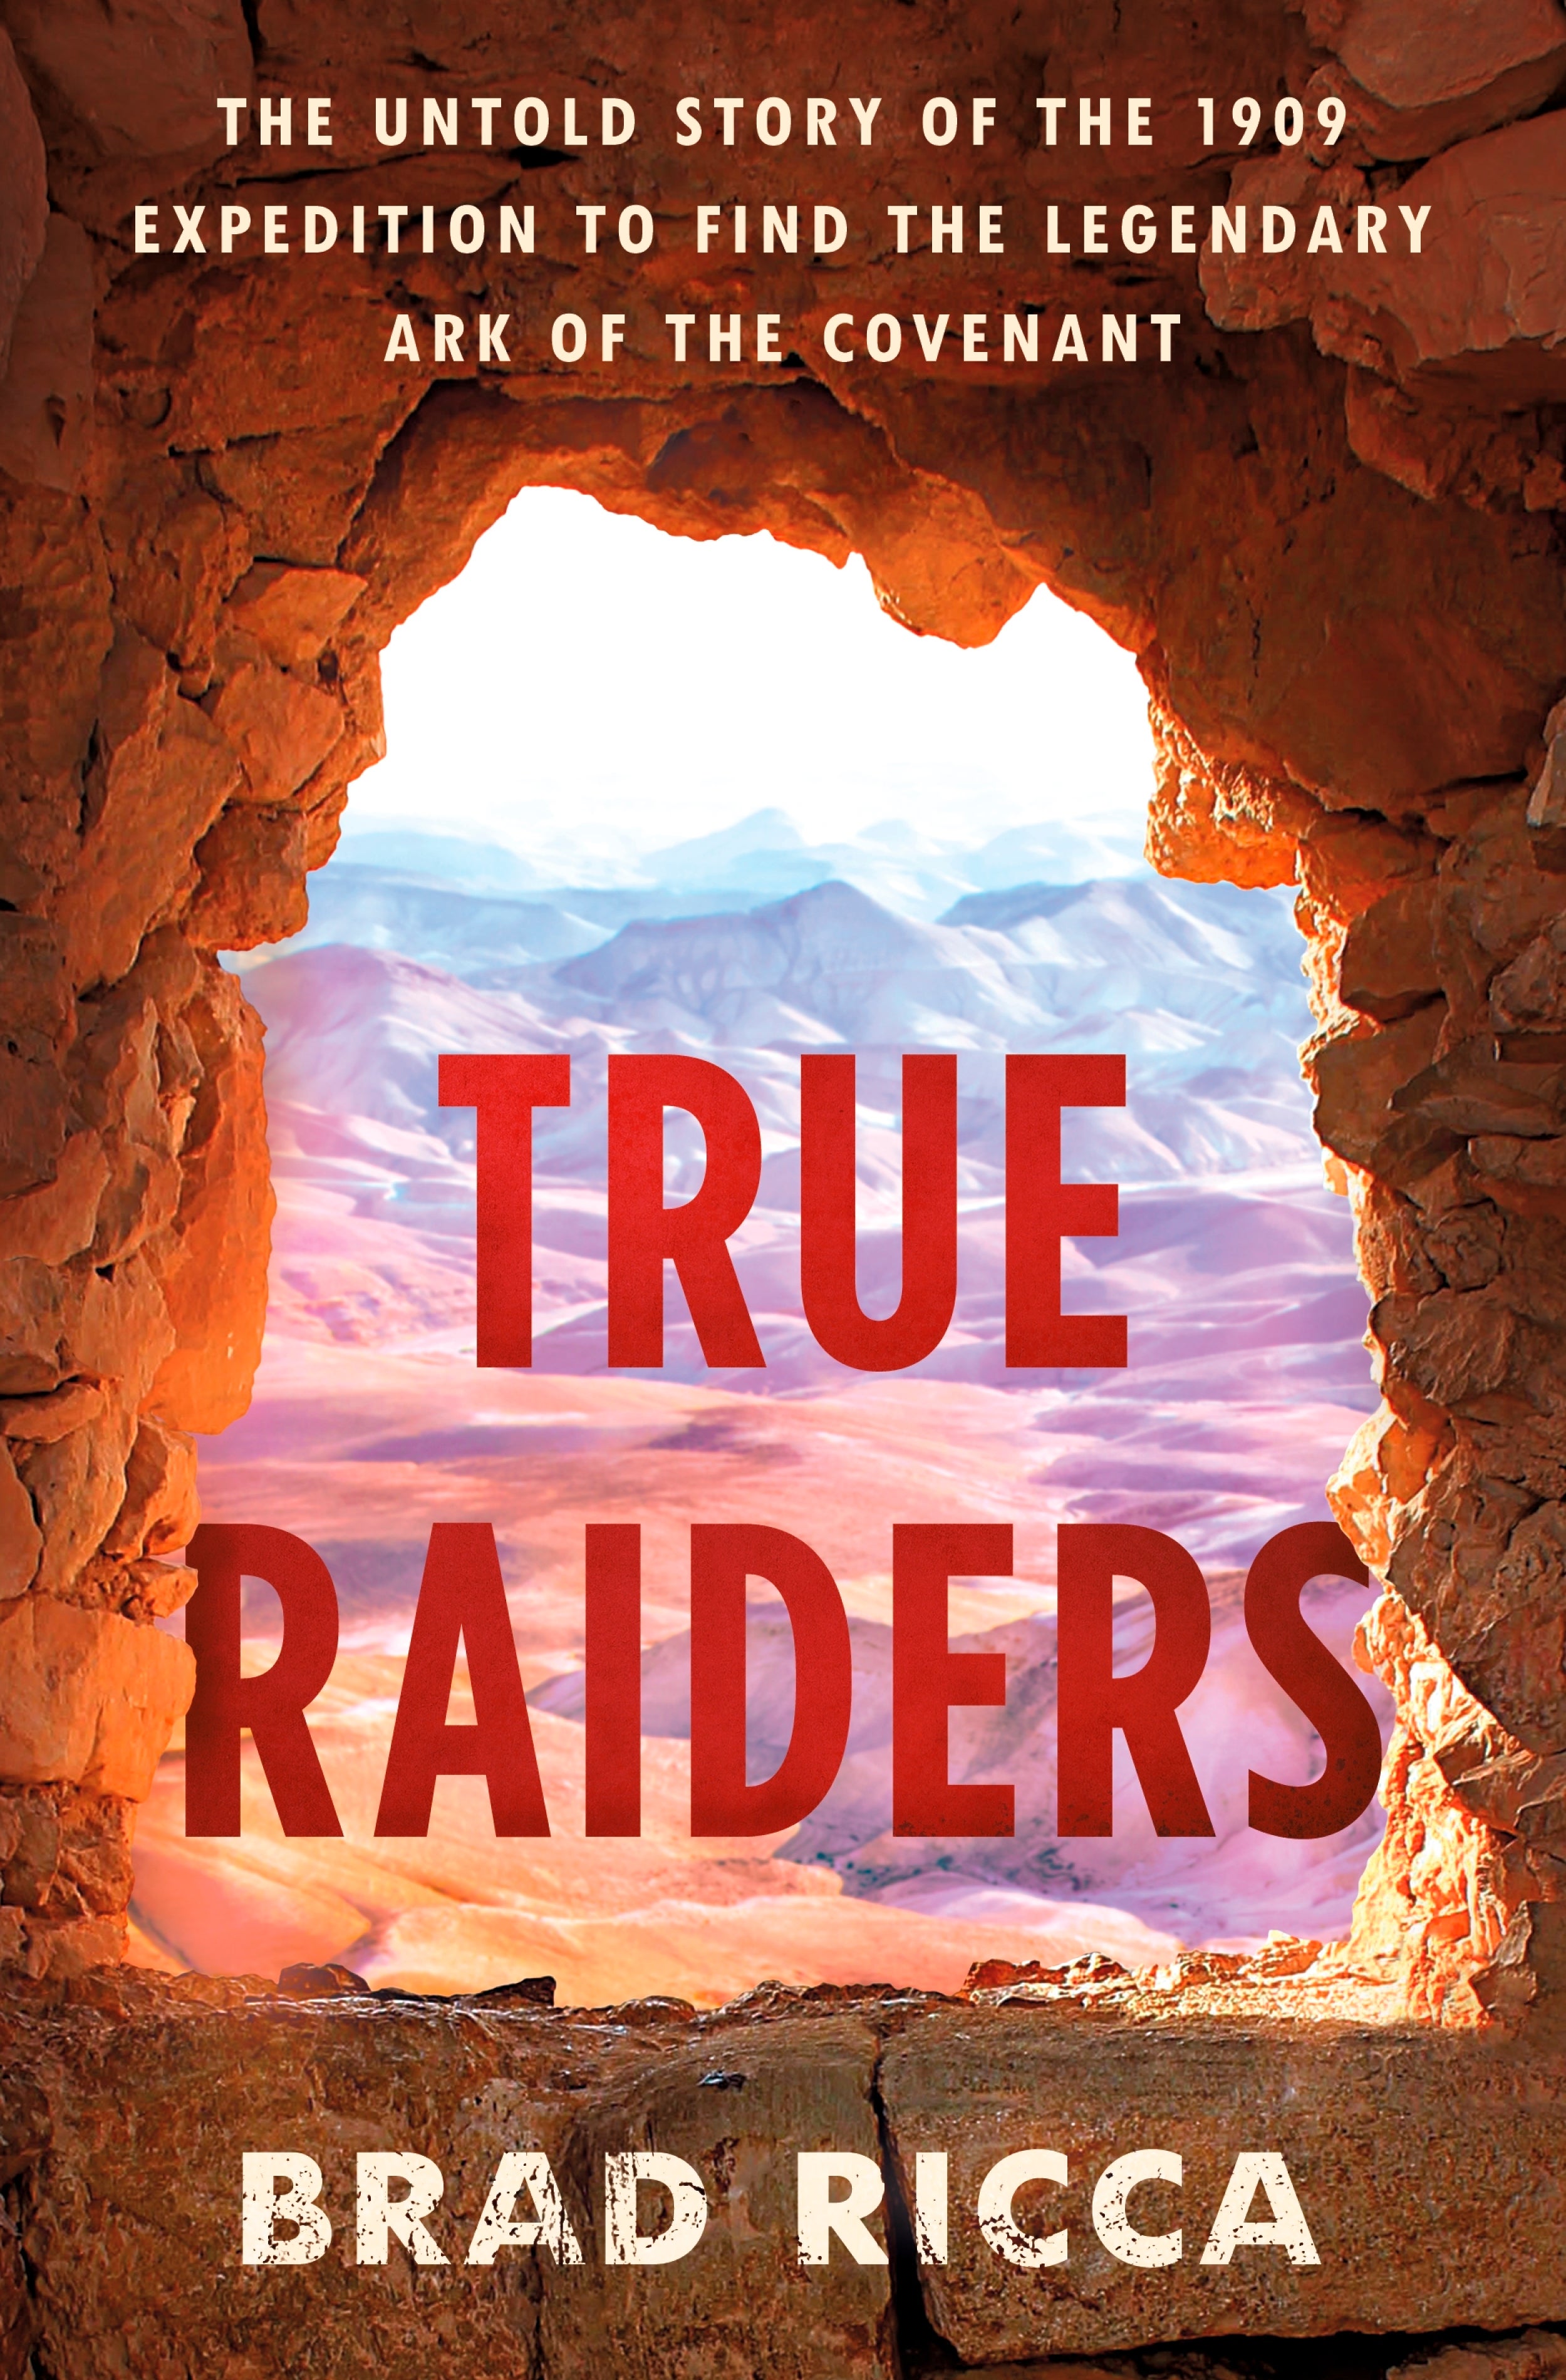 Book Review - True Raiders